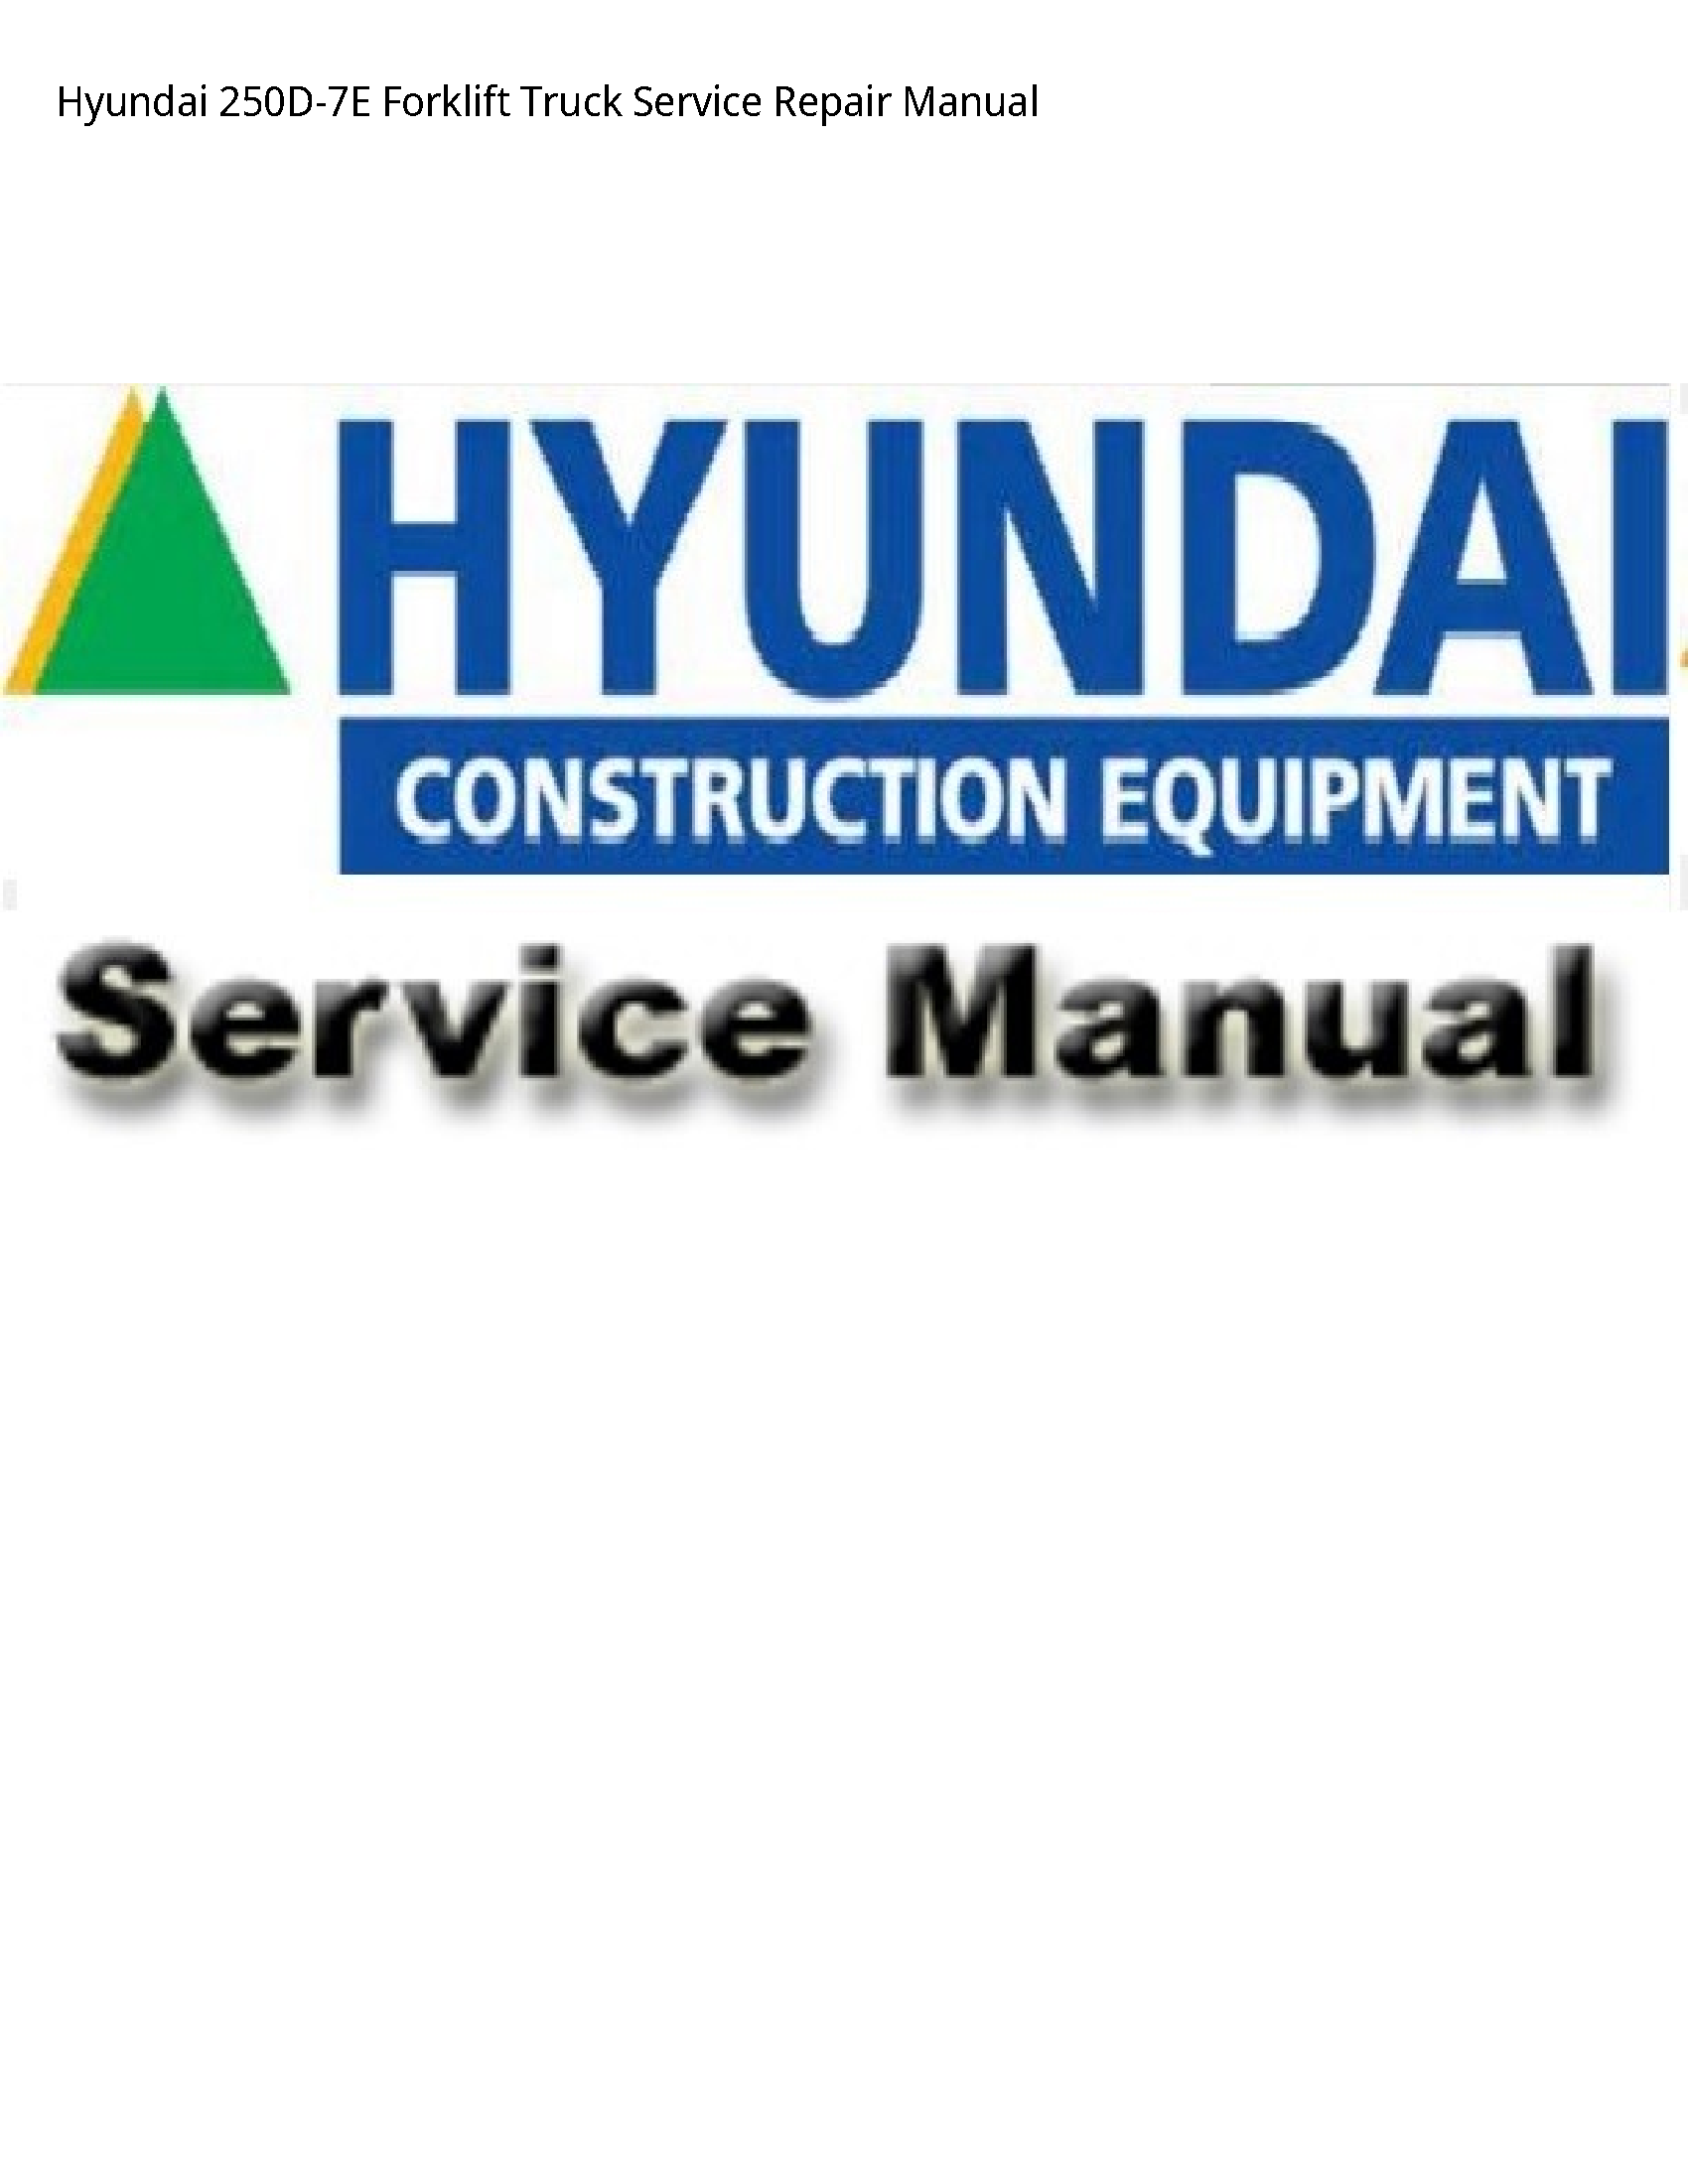 Hyundai 250D-7E Forklift Truck manual